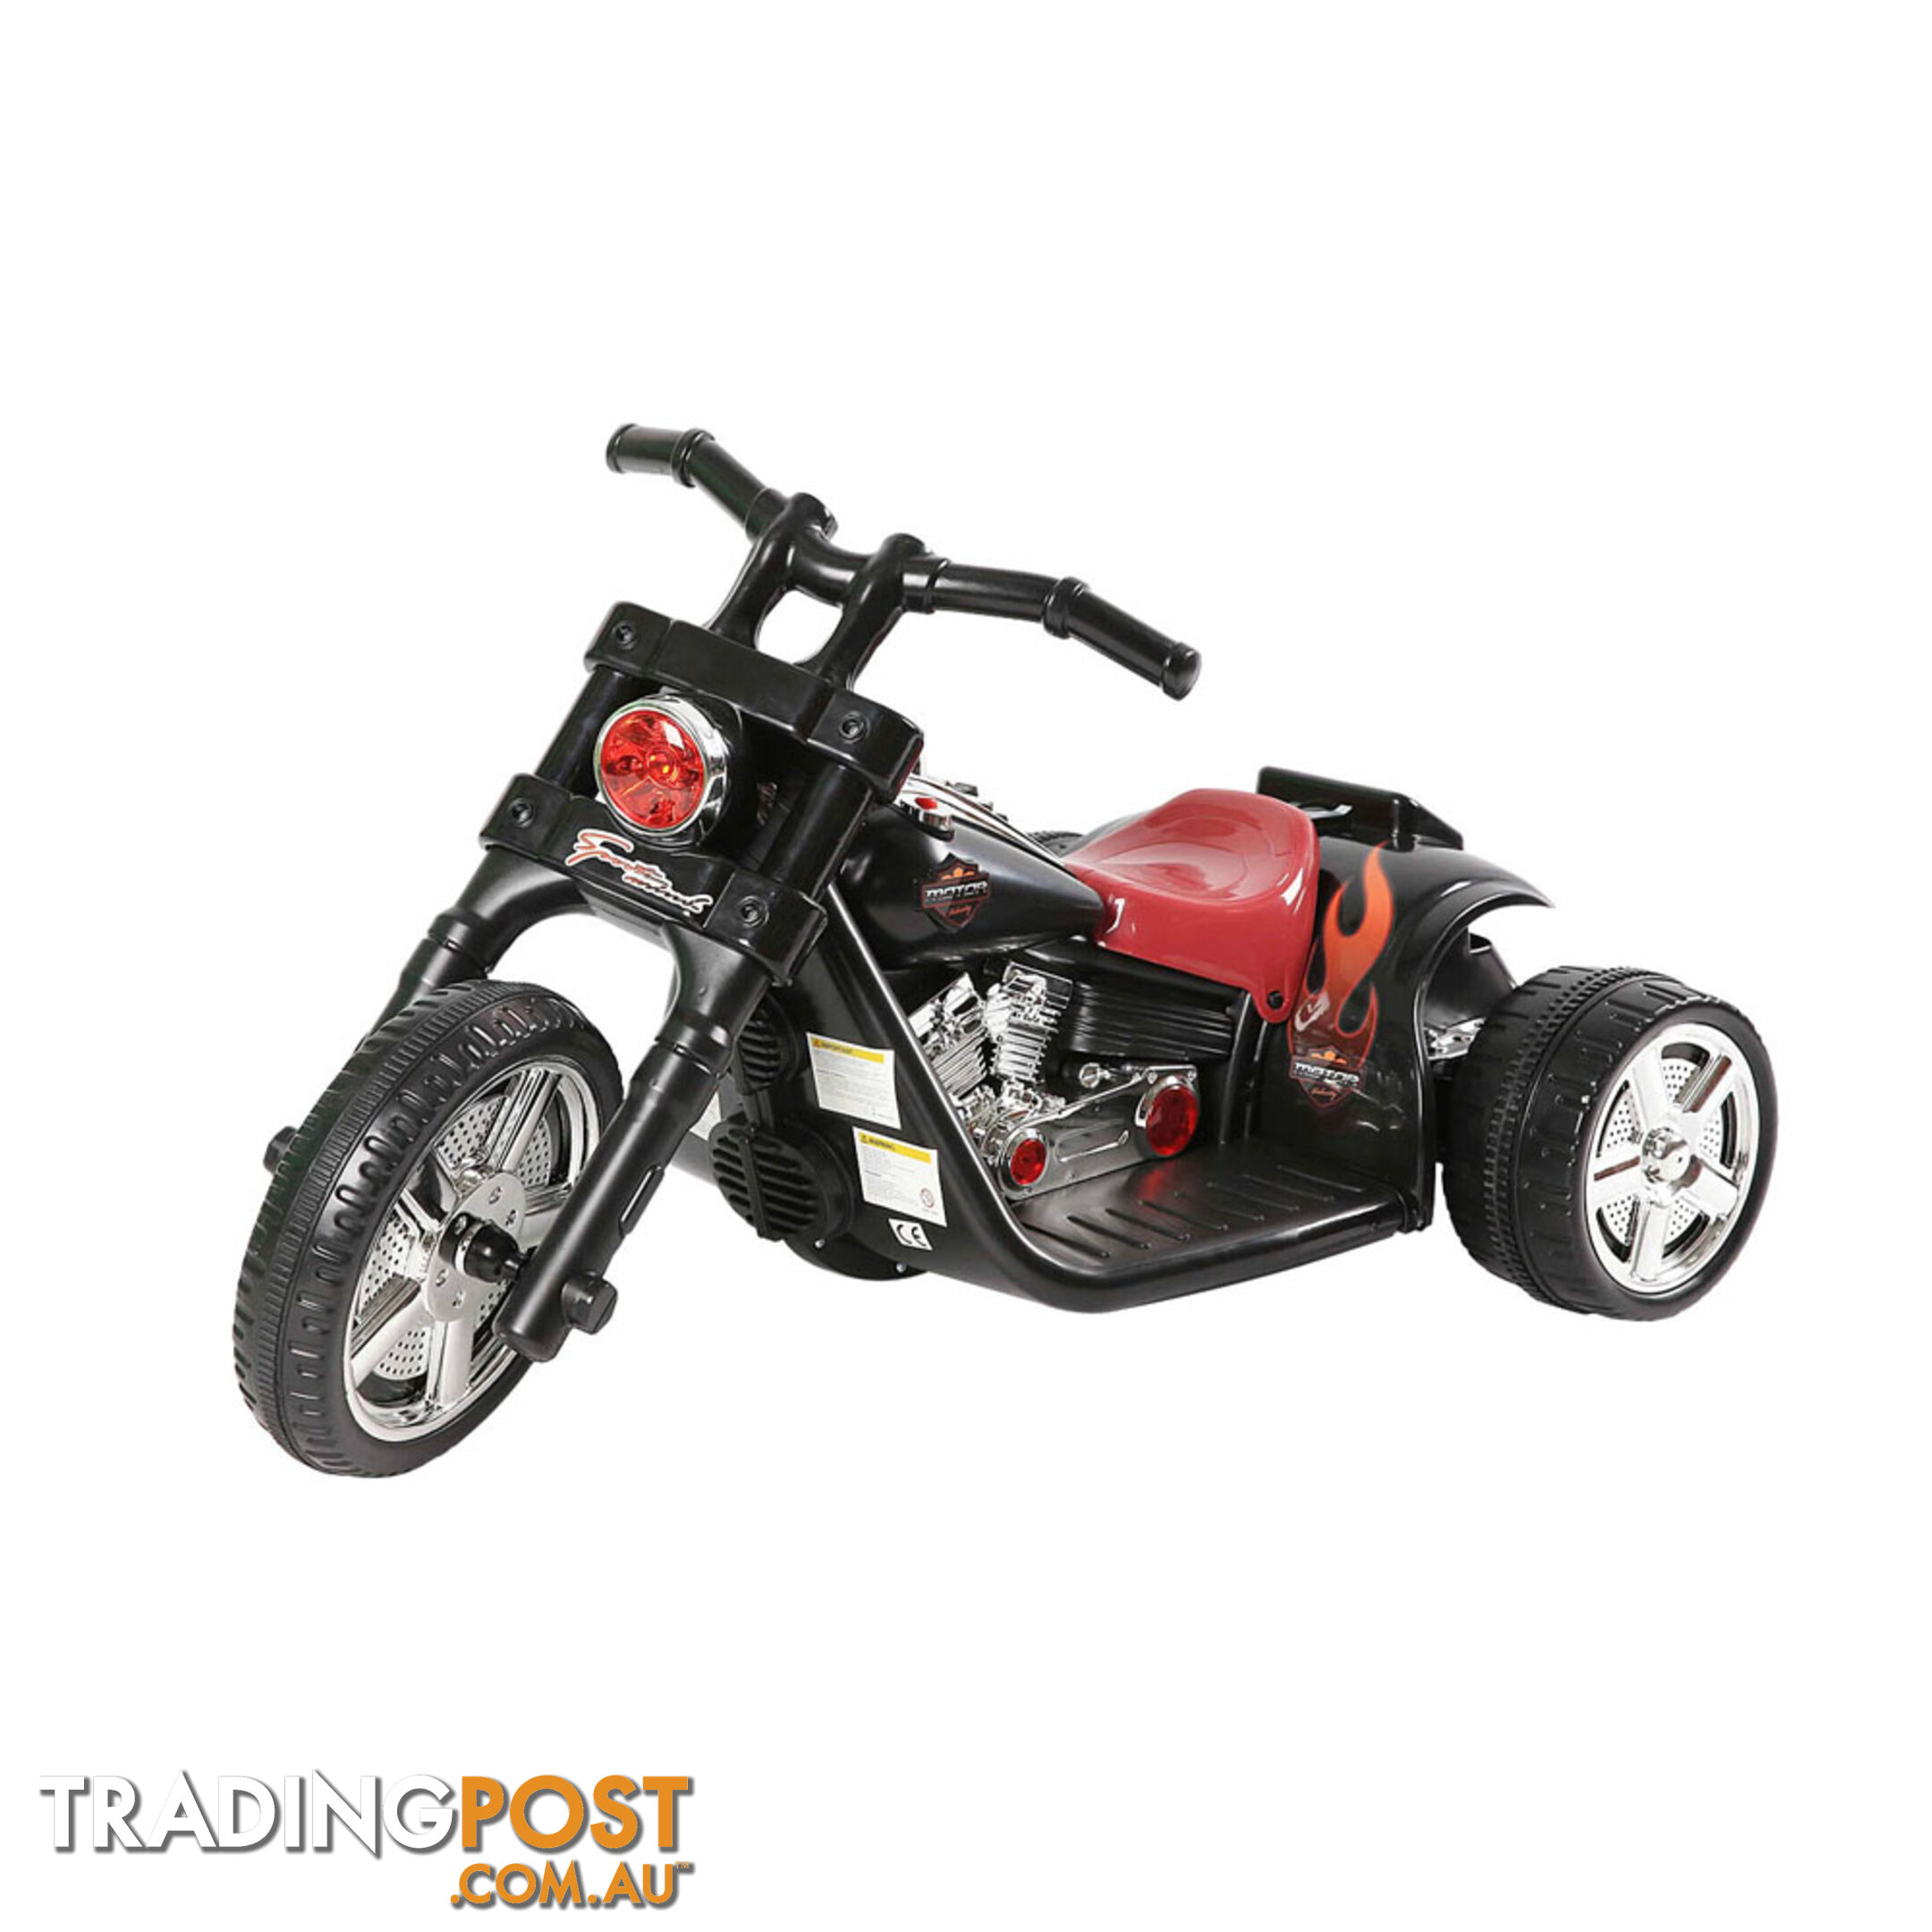 Kids Ride On Motorbike Harley Style Electric Motorcycle Toy Bike Car Black